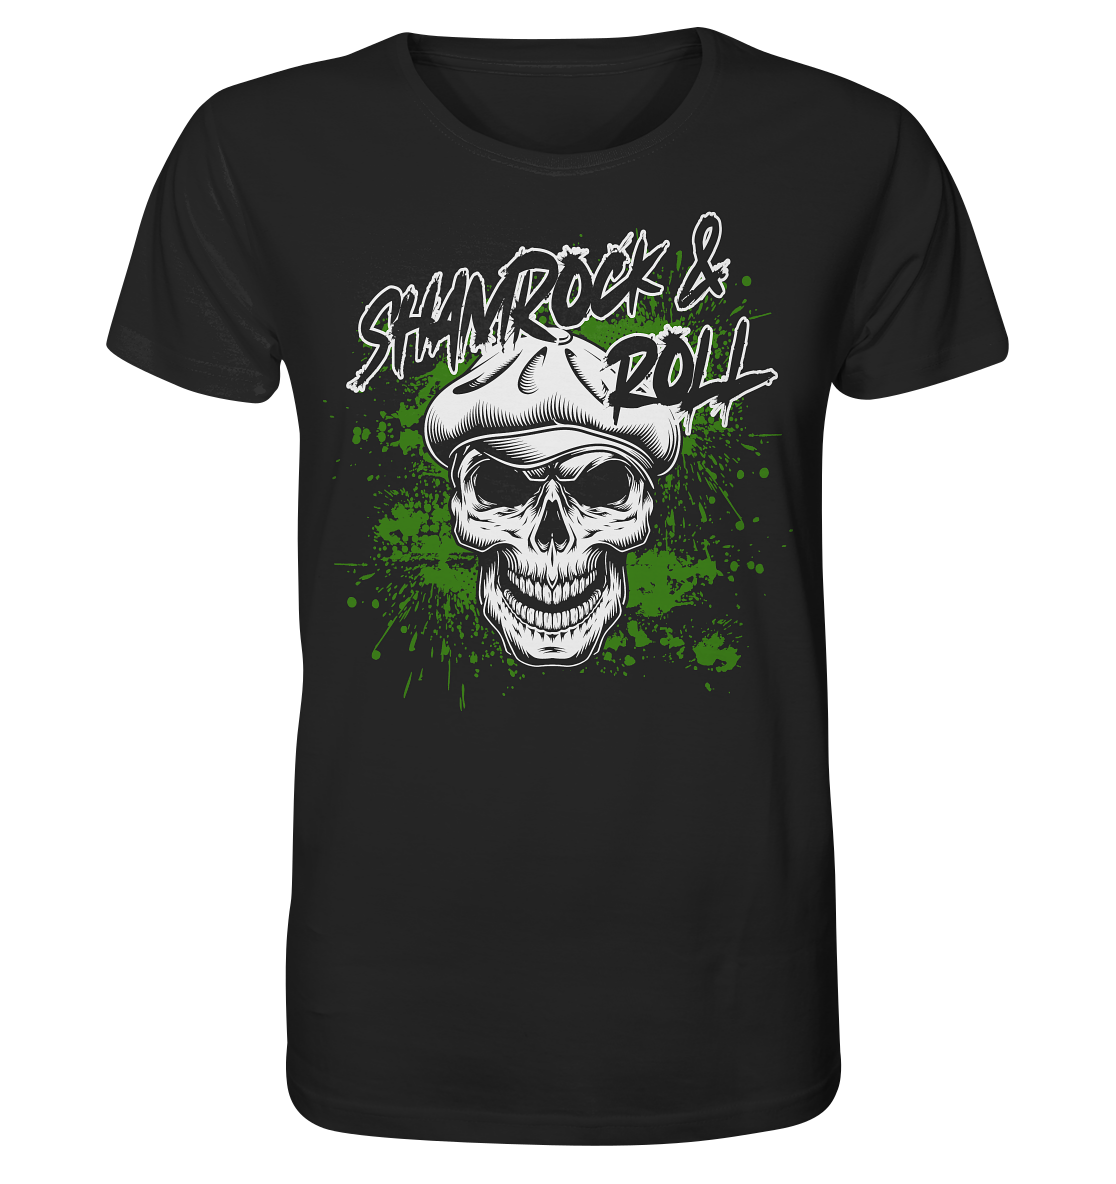 Shamrock And Roll "Skull" - Organic Shirt